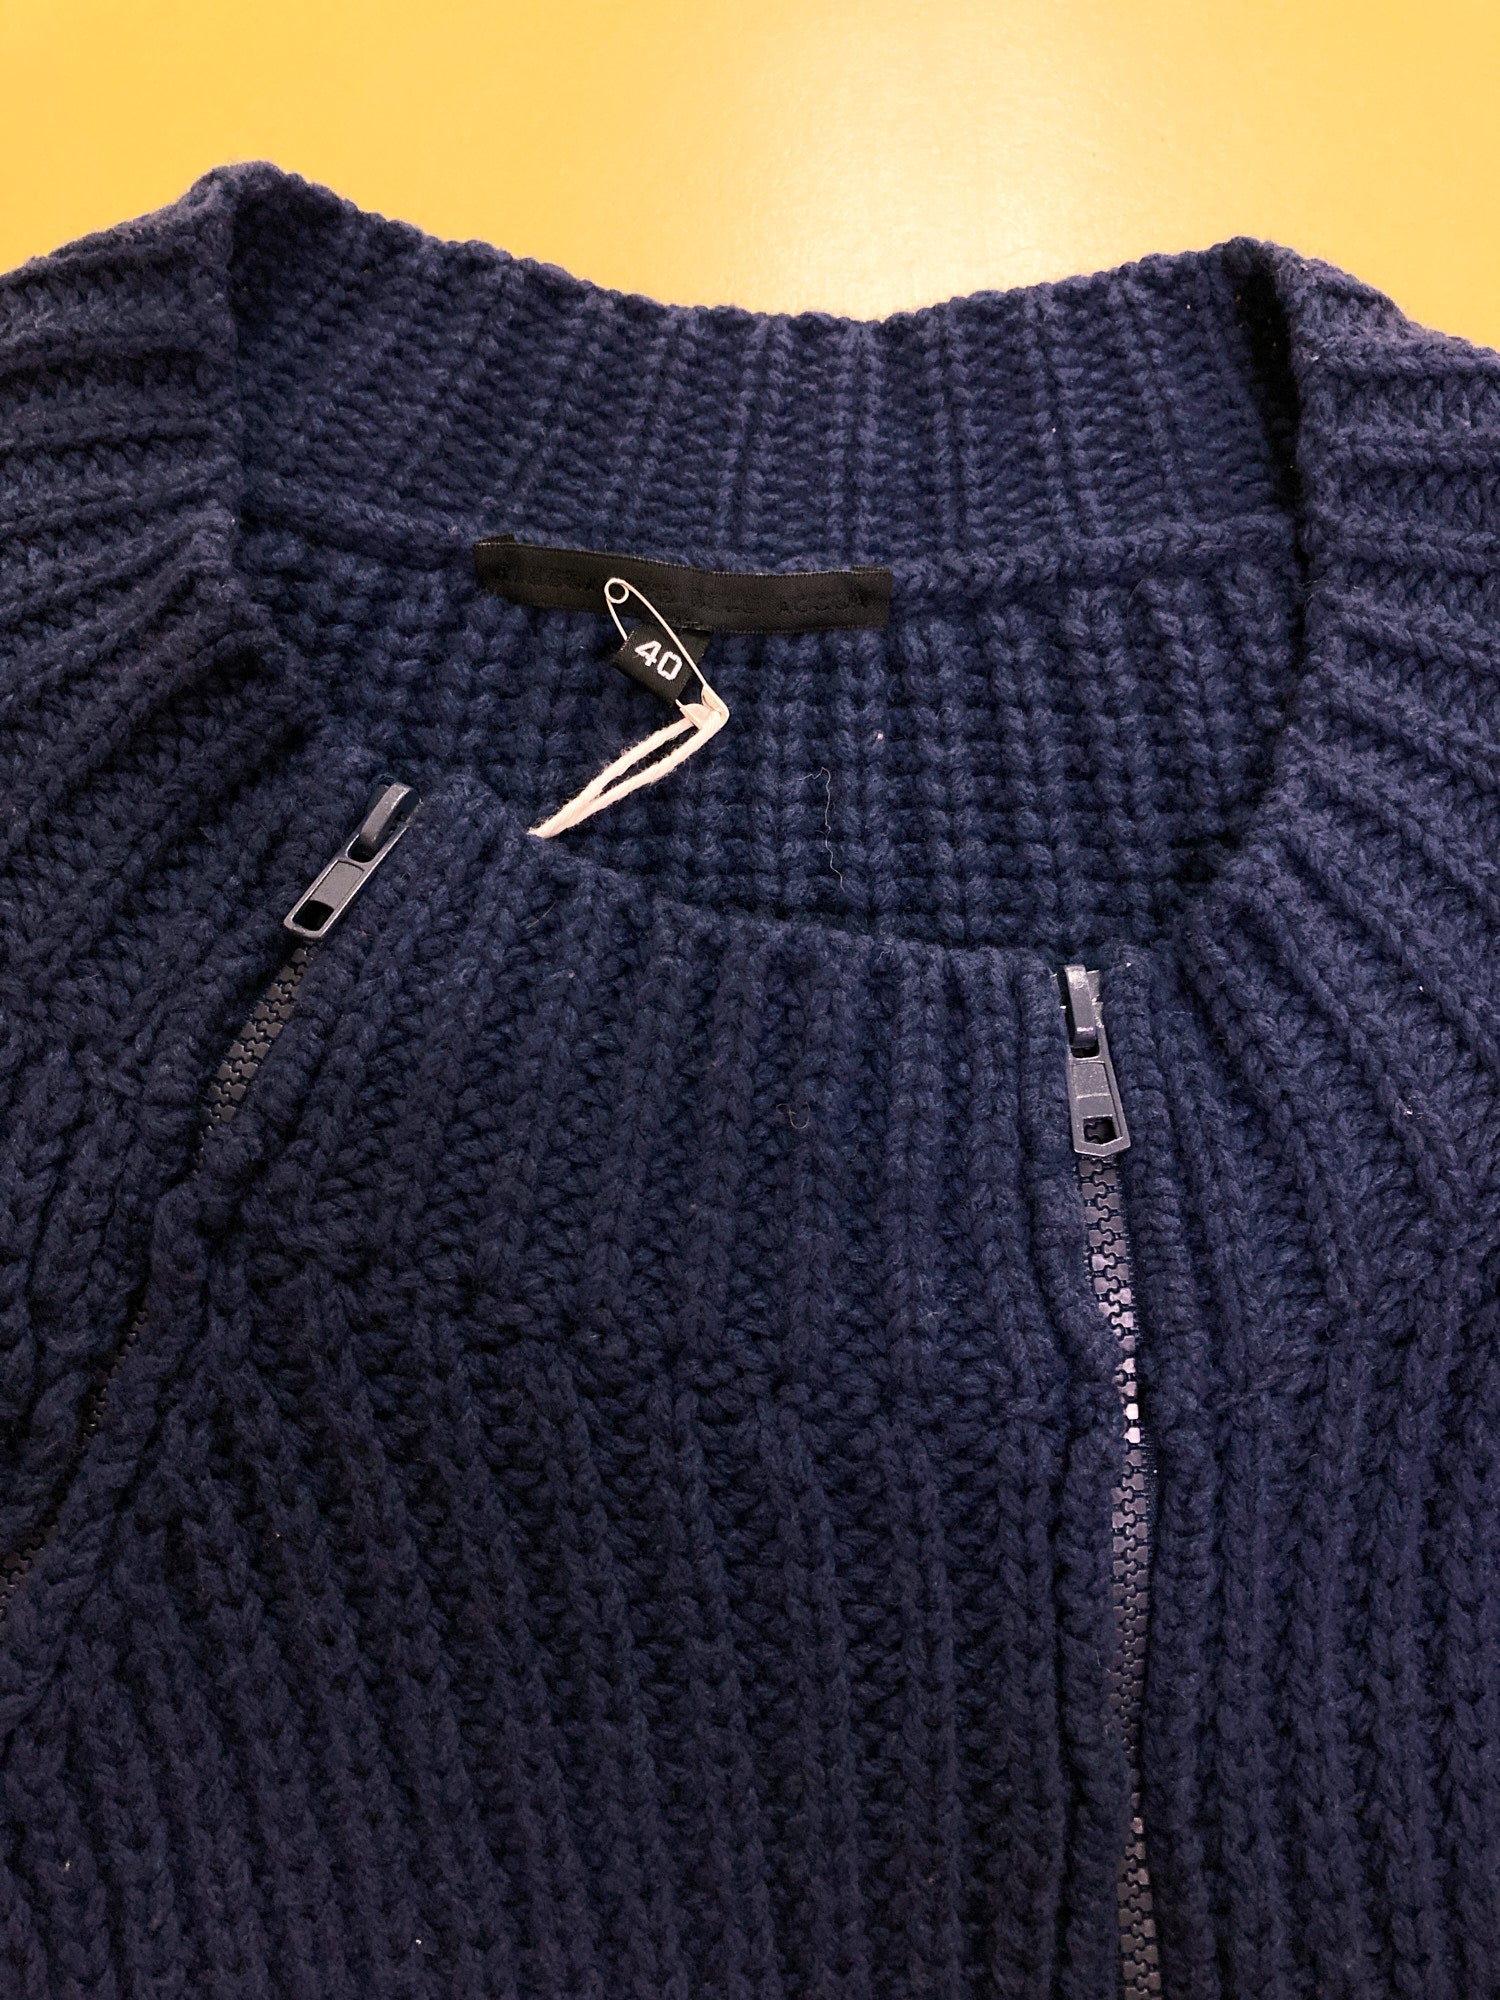 Alessandro Dell'acqua petrol blue wool rib knit double zip cardigan - size 40